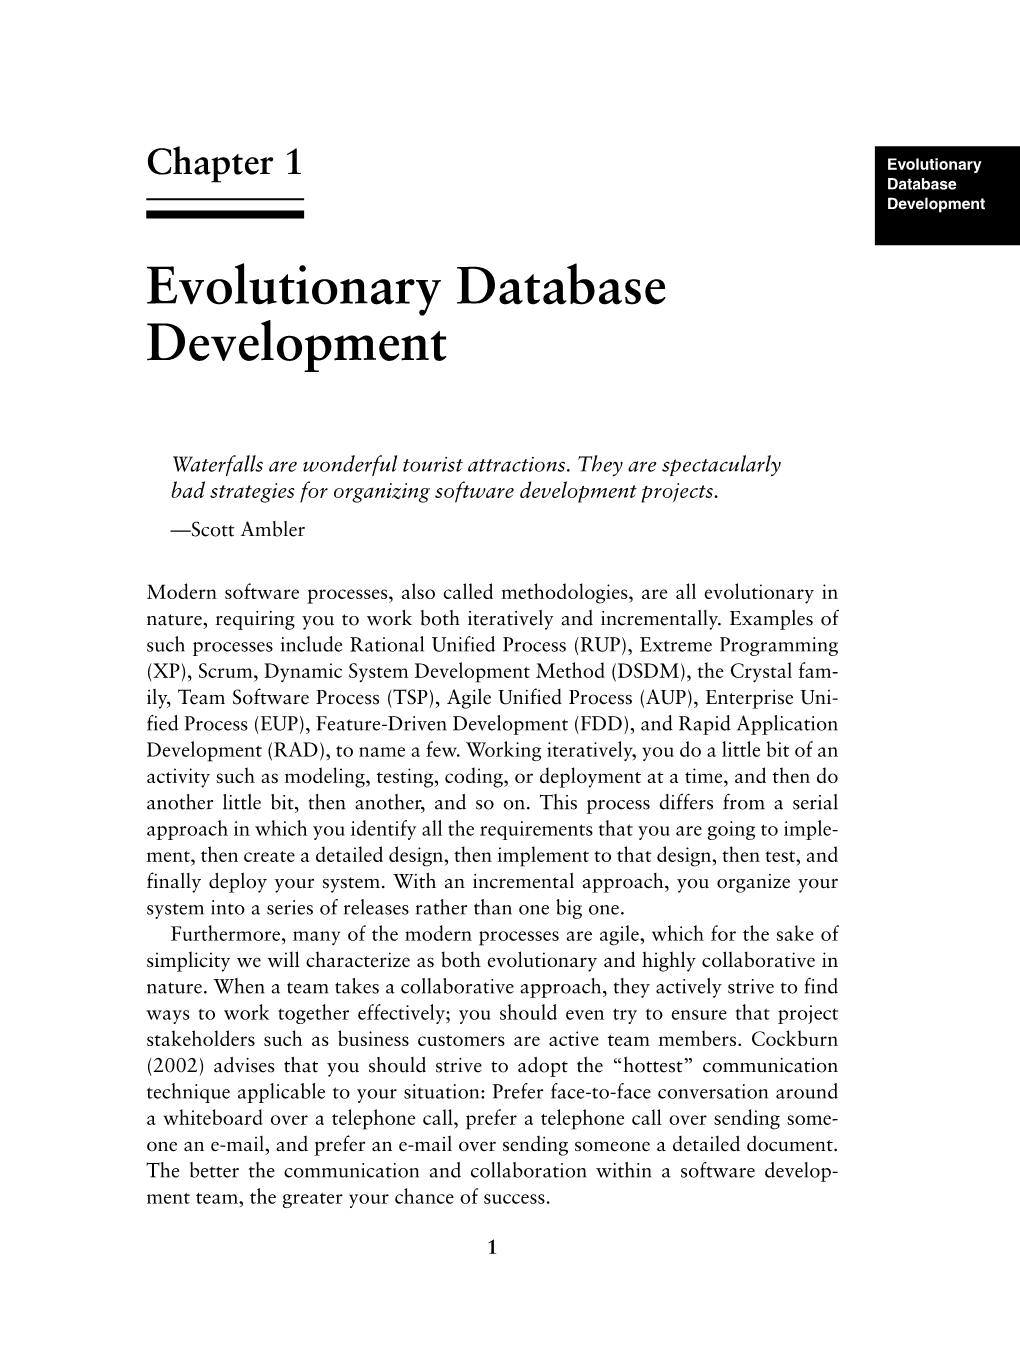 Evolutionary Database Development Evolutionary Database Development